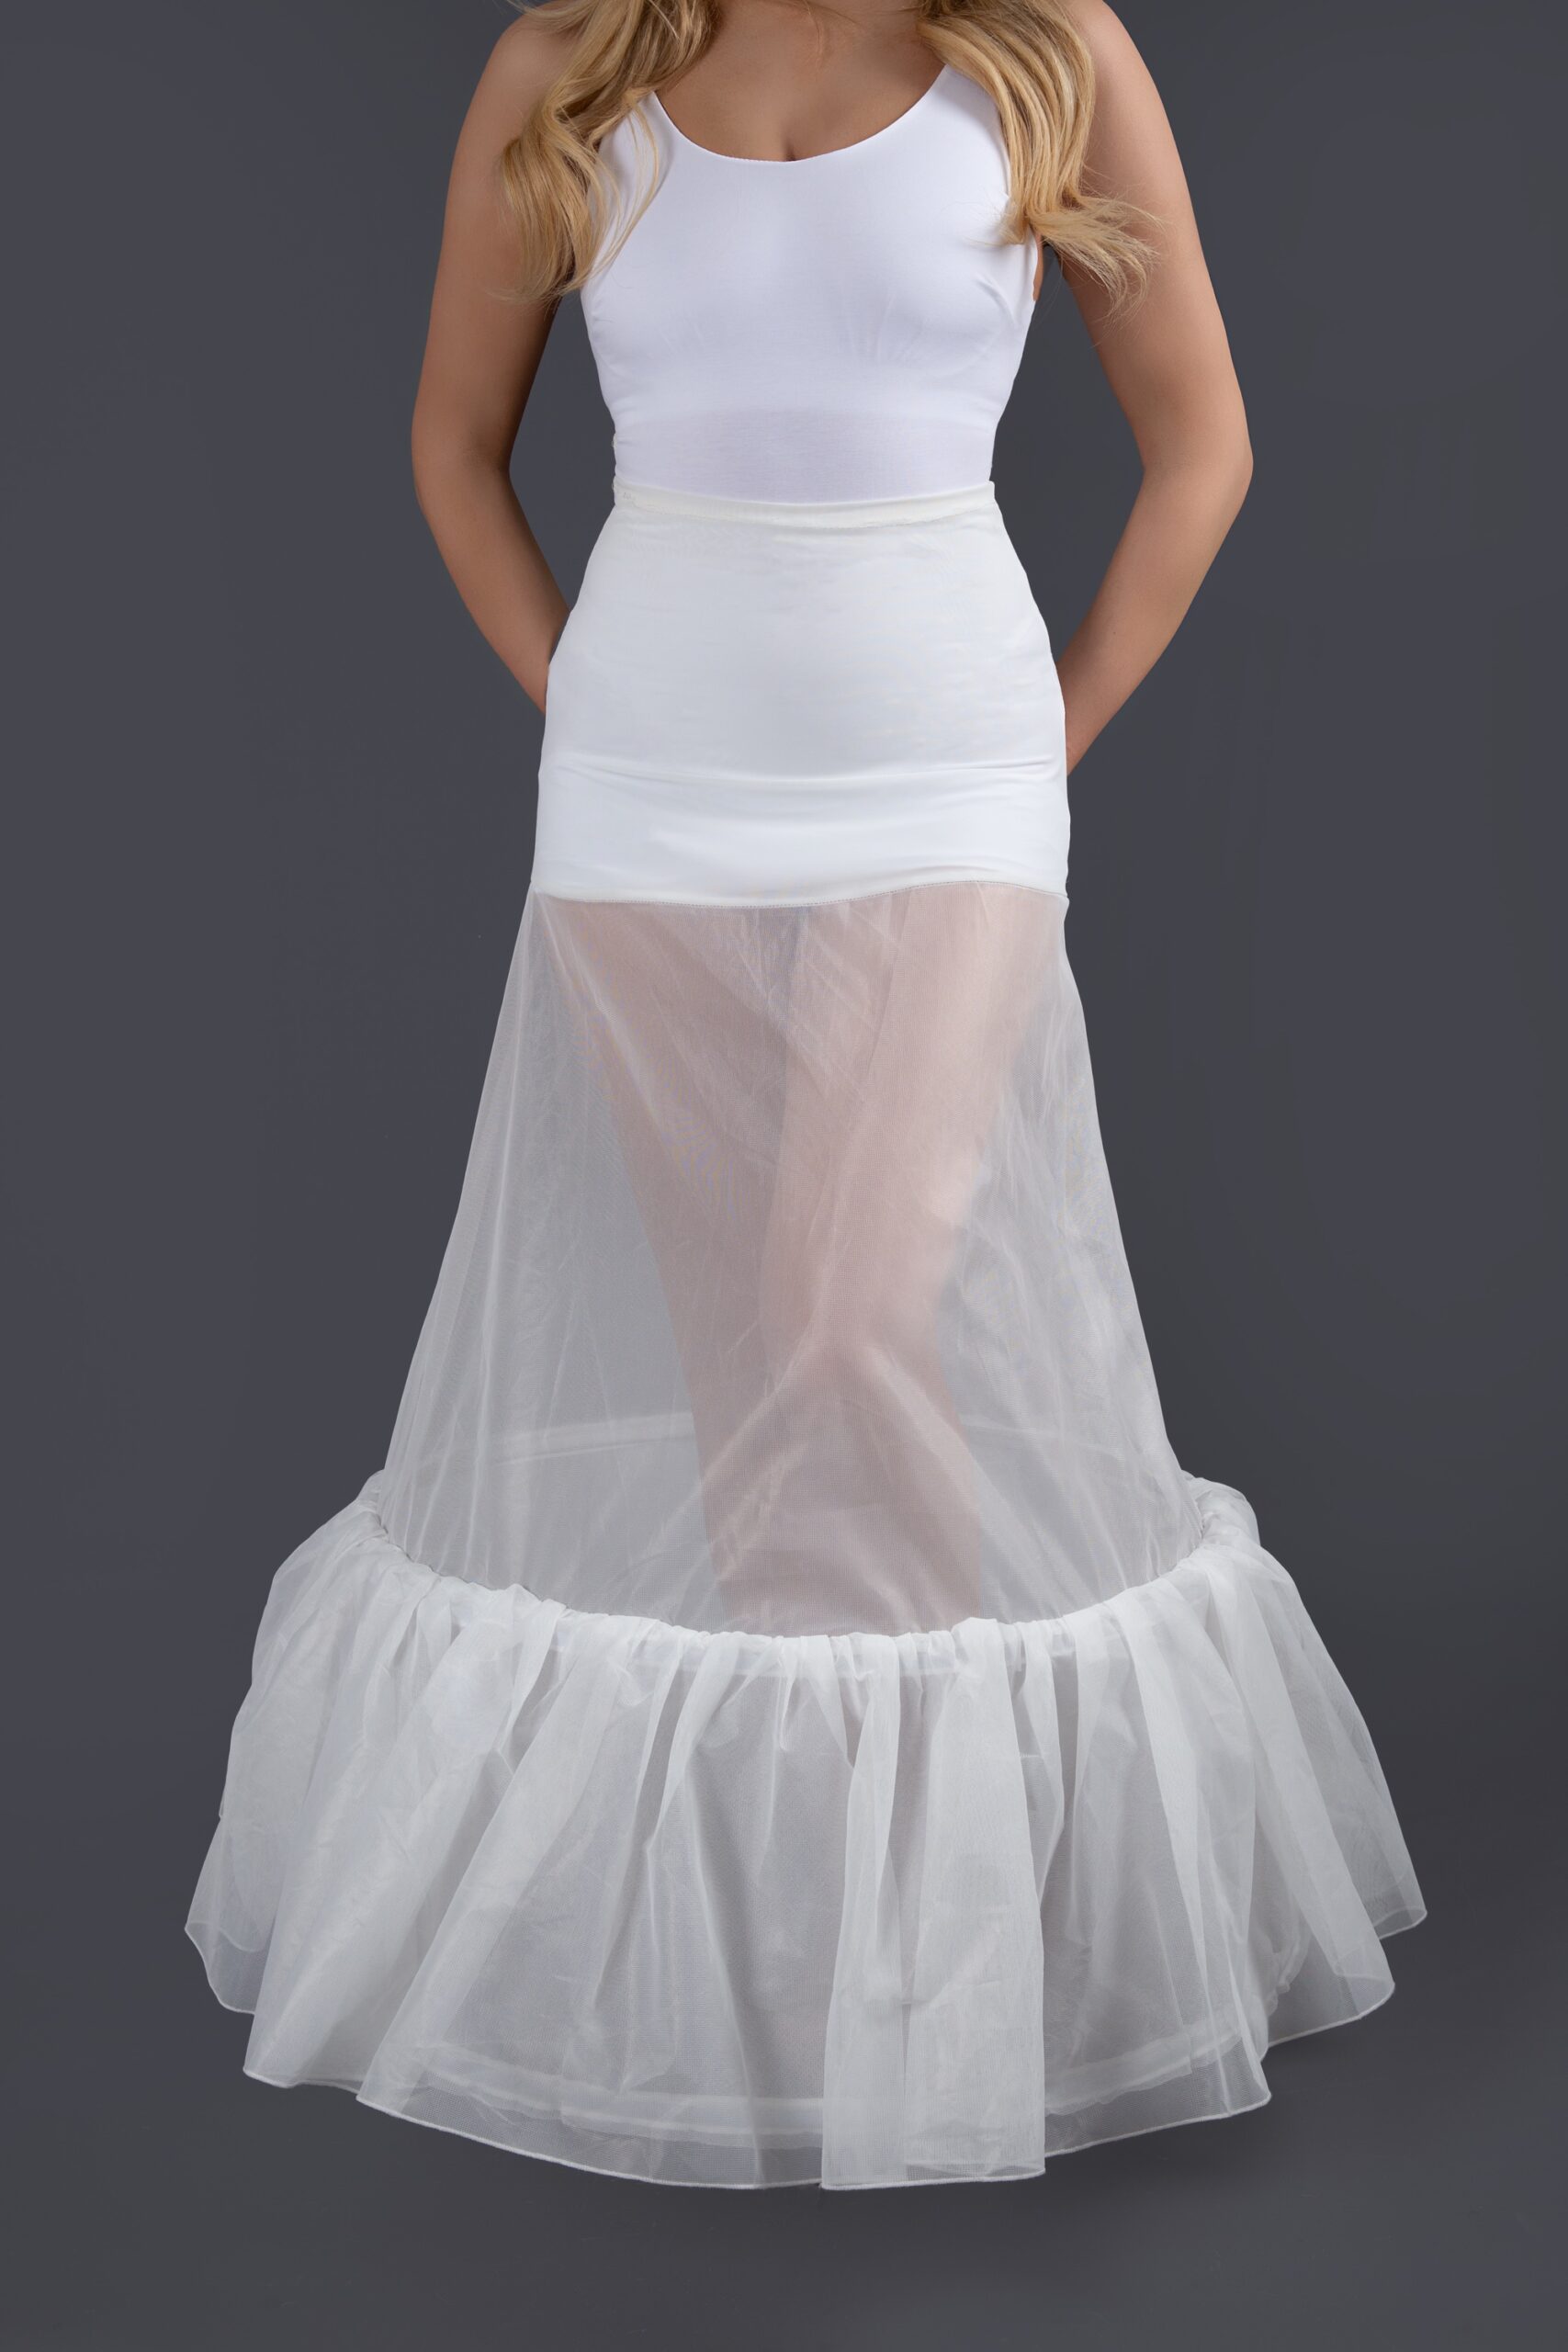 Women Wedding A-Line/Hoopless Ball Gown Crinoline Petticoat Slip Underskirt  US | eBay